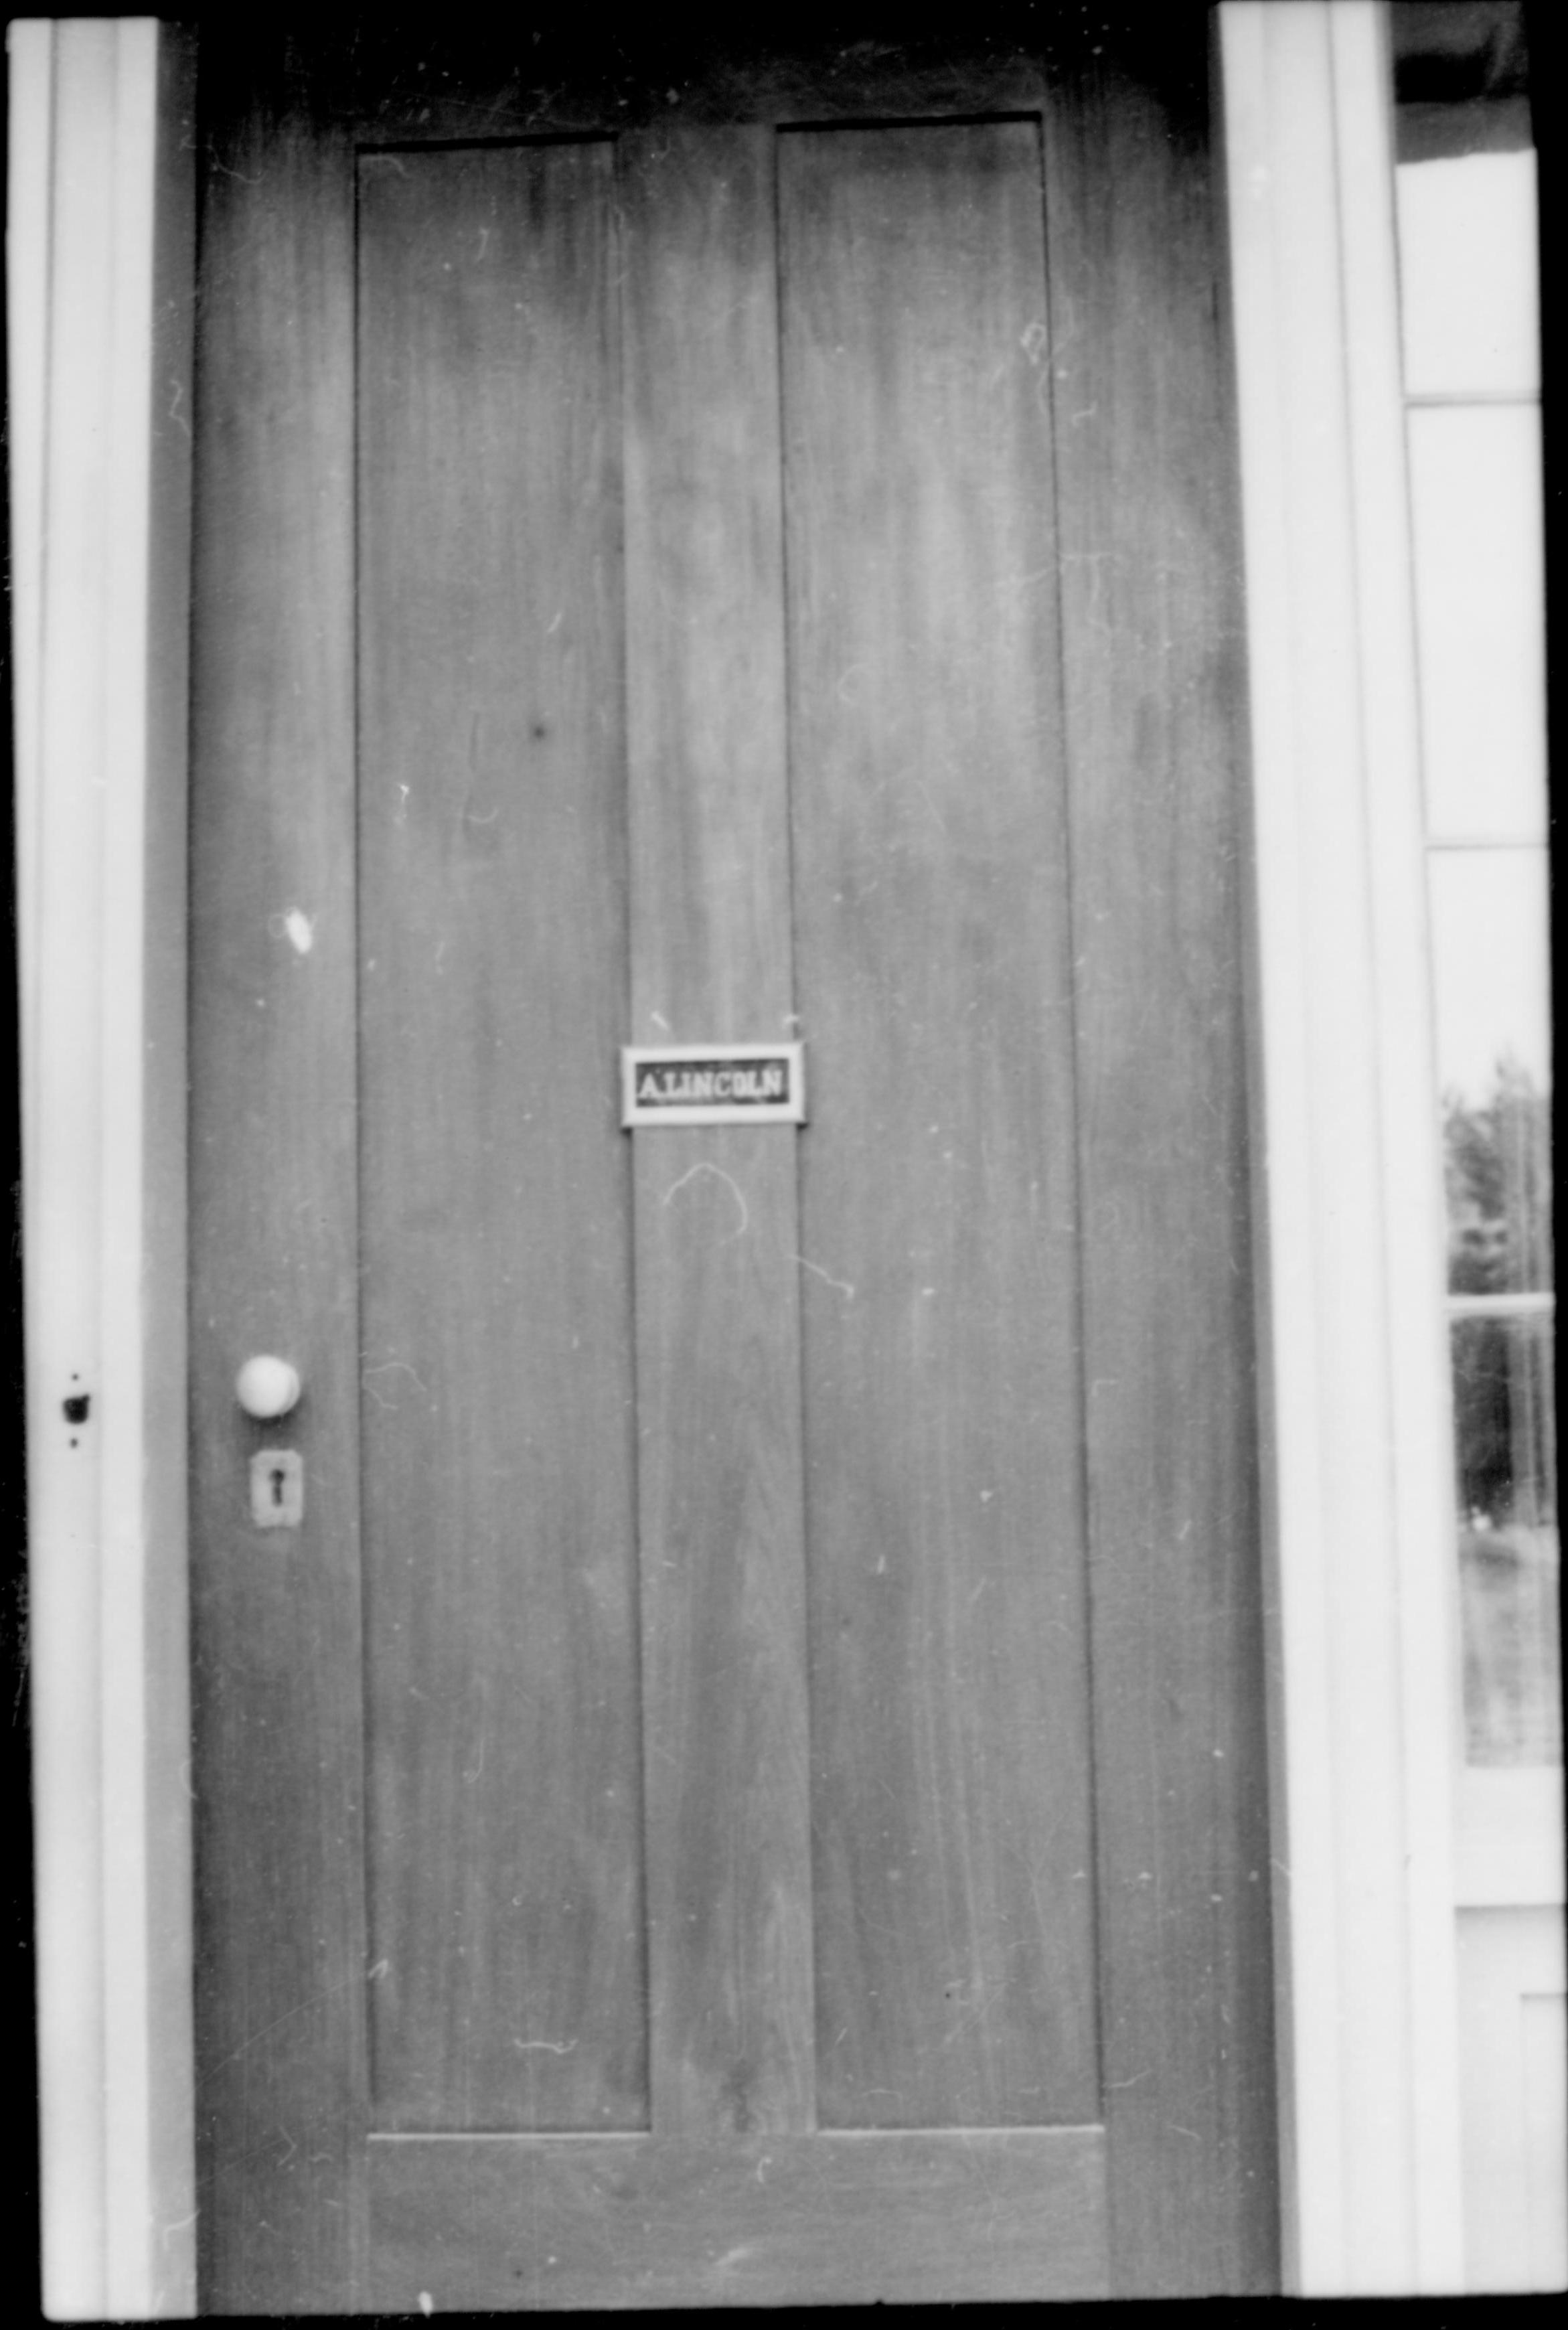 NA Lincoln, Home, Restoration, Exterior, Door